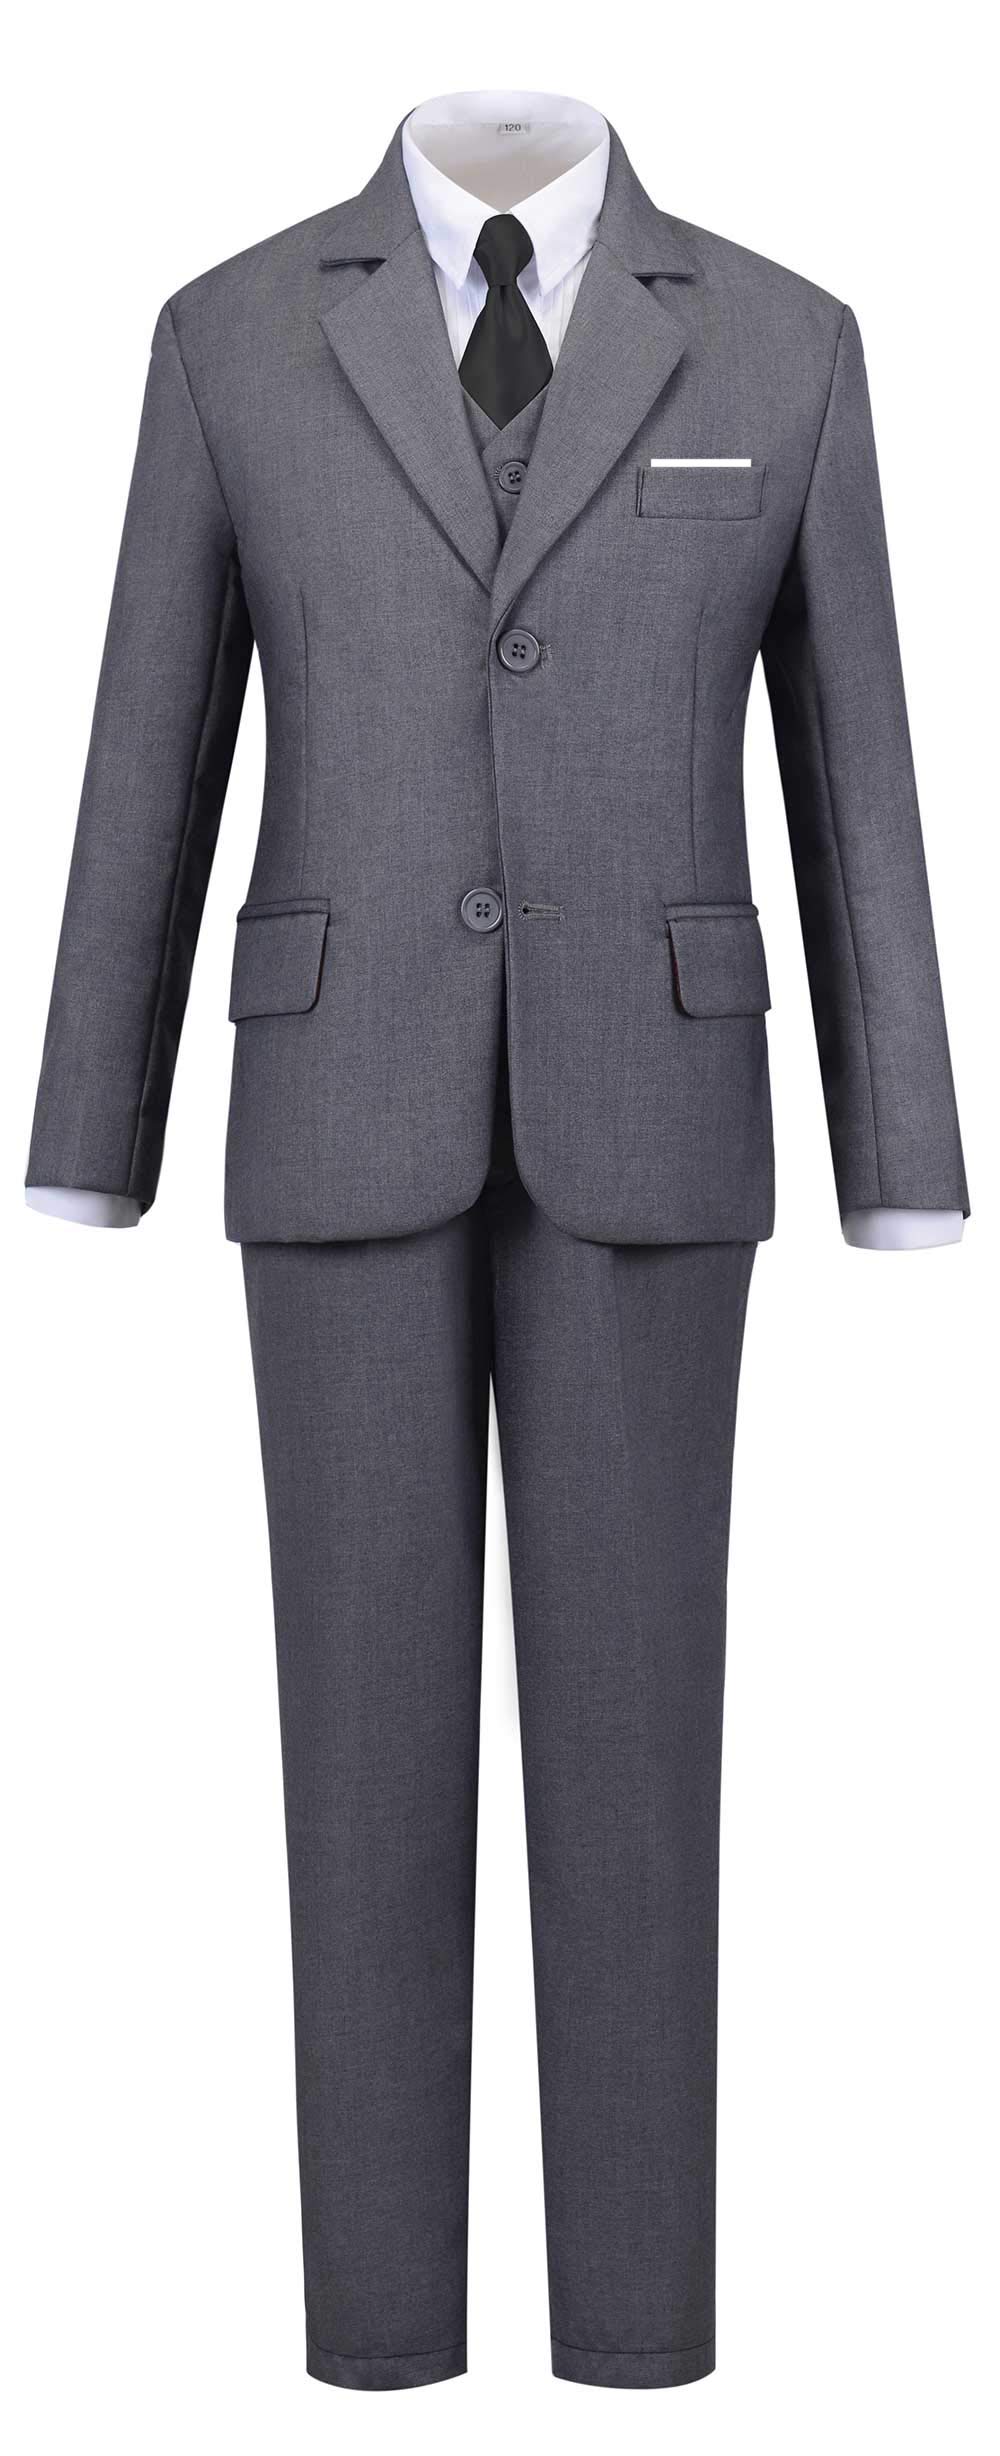 Addneo Big Boys Suits Slim Fit Formal Suit Set With Jacket Vest Pants Dress White Shirt And Black Tie Size 10